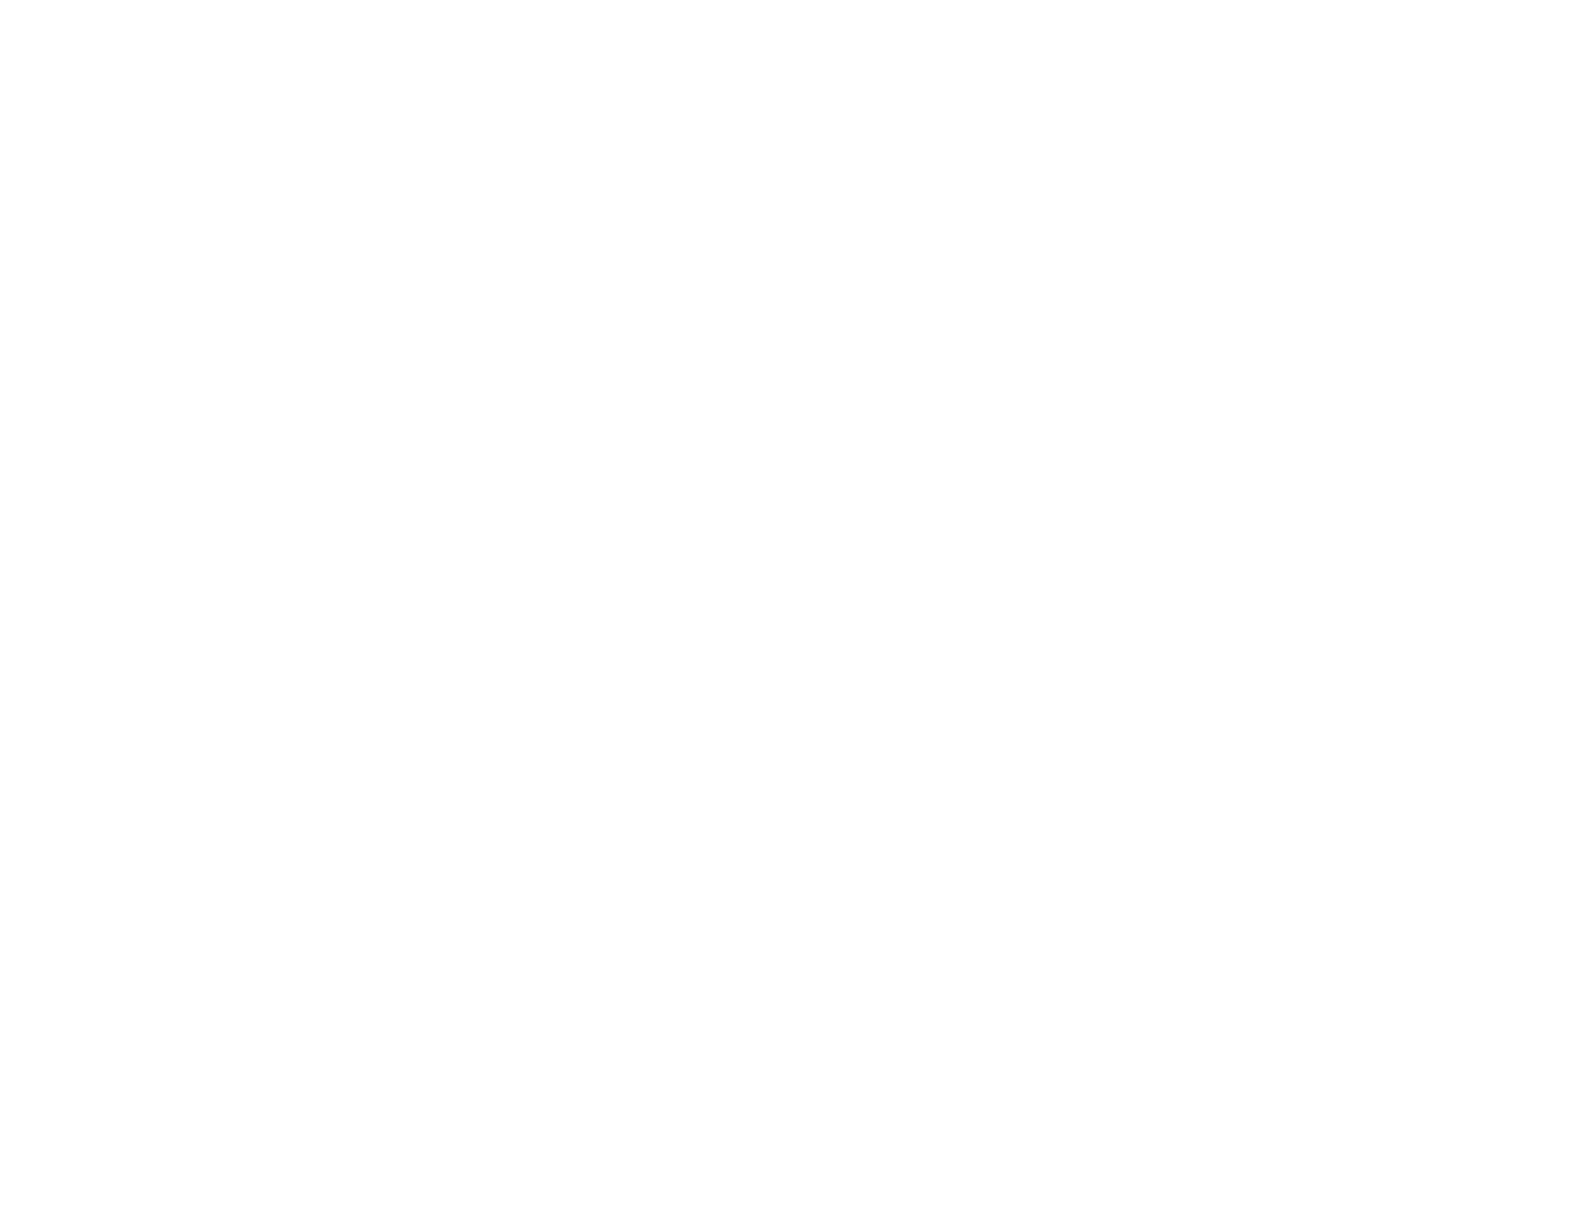 ePlus logo for dark backgrounds (transparent PNG)